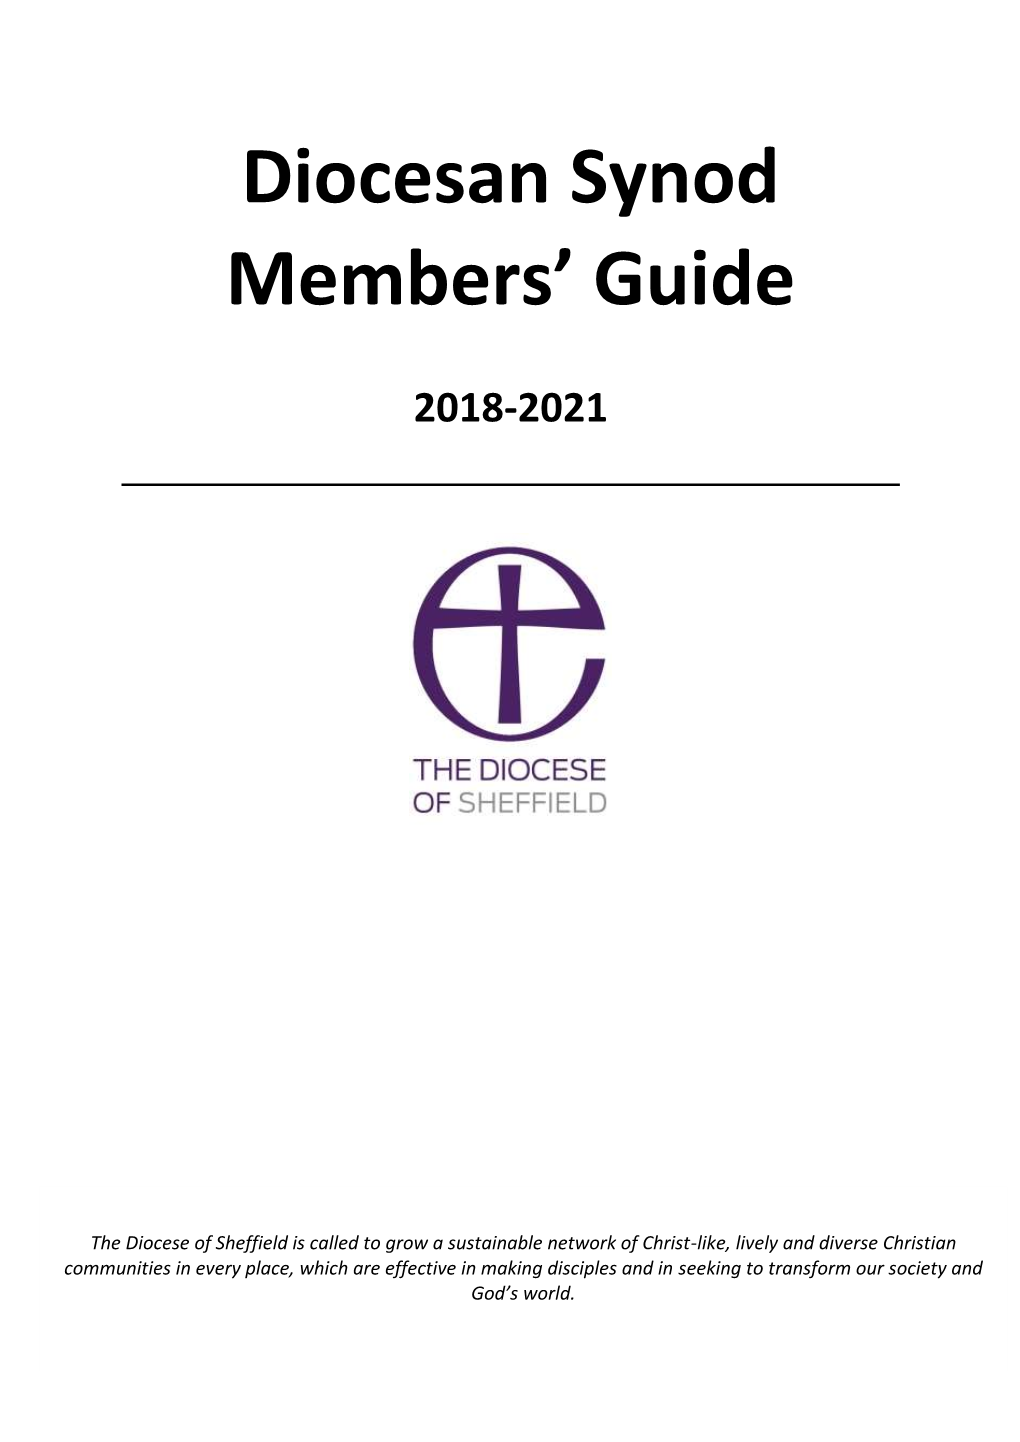 Diocesan Synod Members' Guide